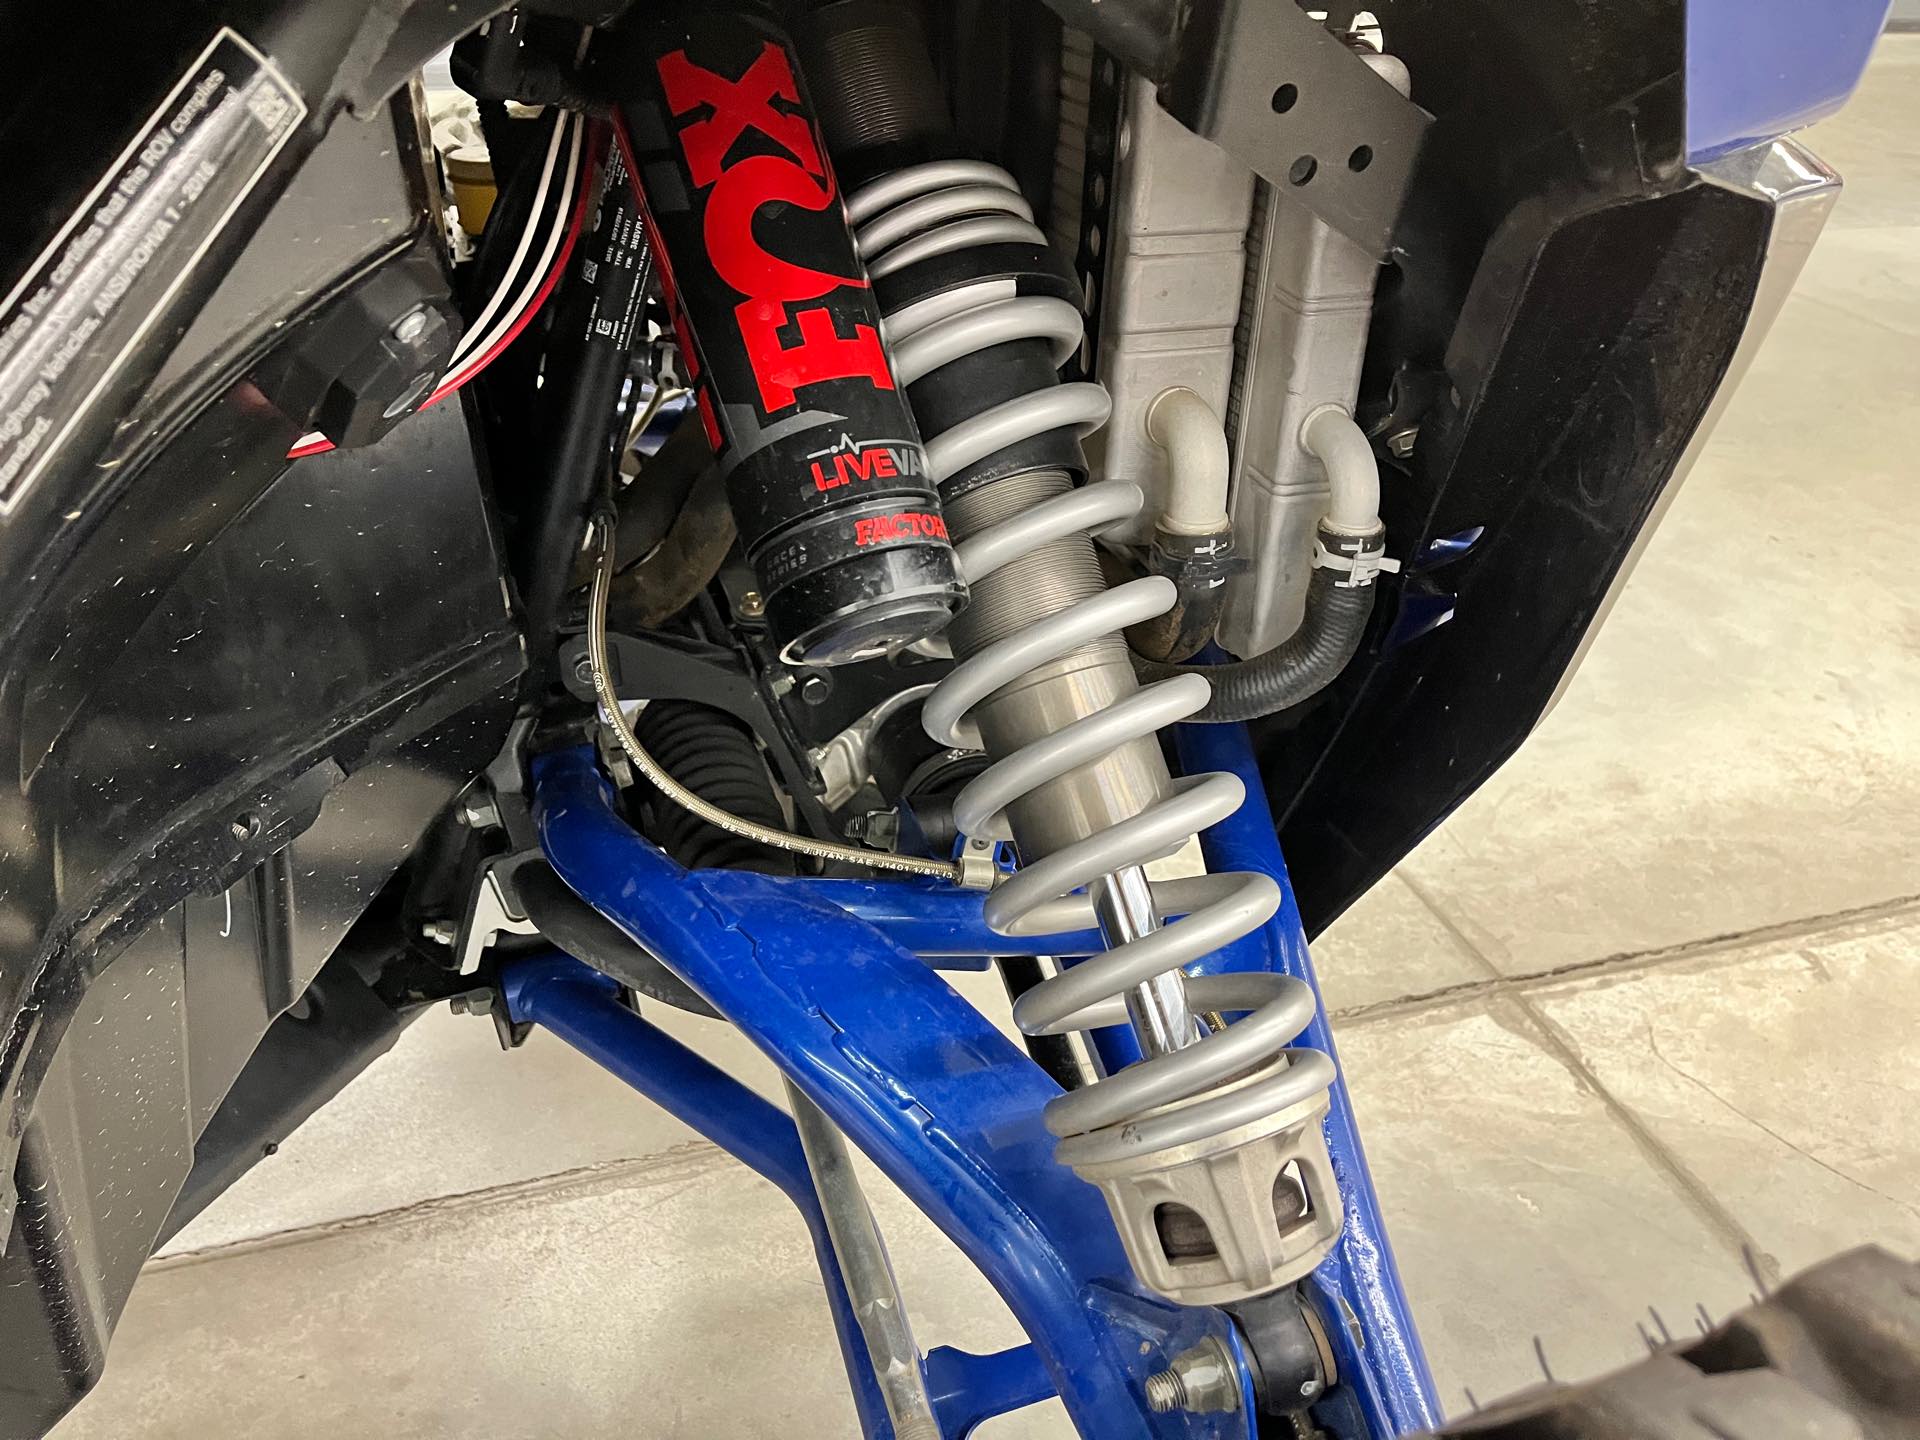 2019 Polaris RZR XP 4 Turbo S Base at Aces Motorcycles - Denver